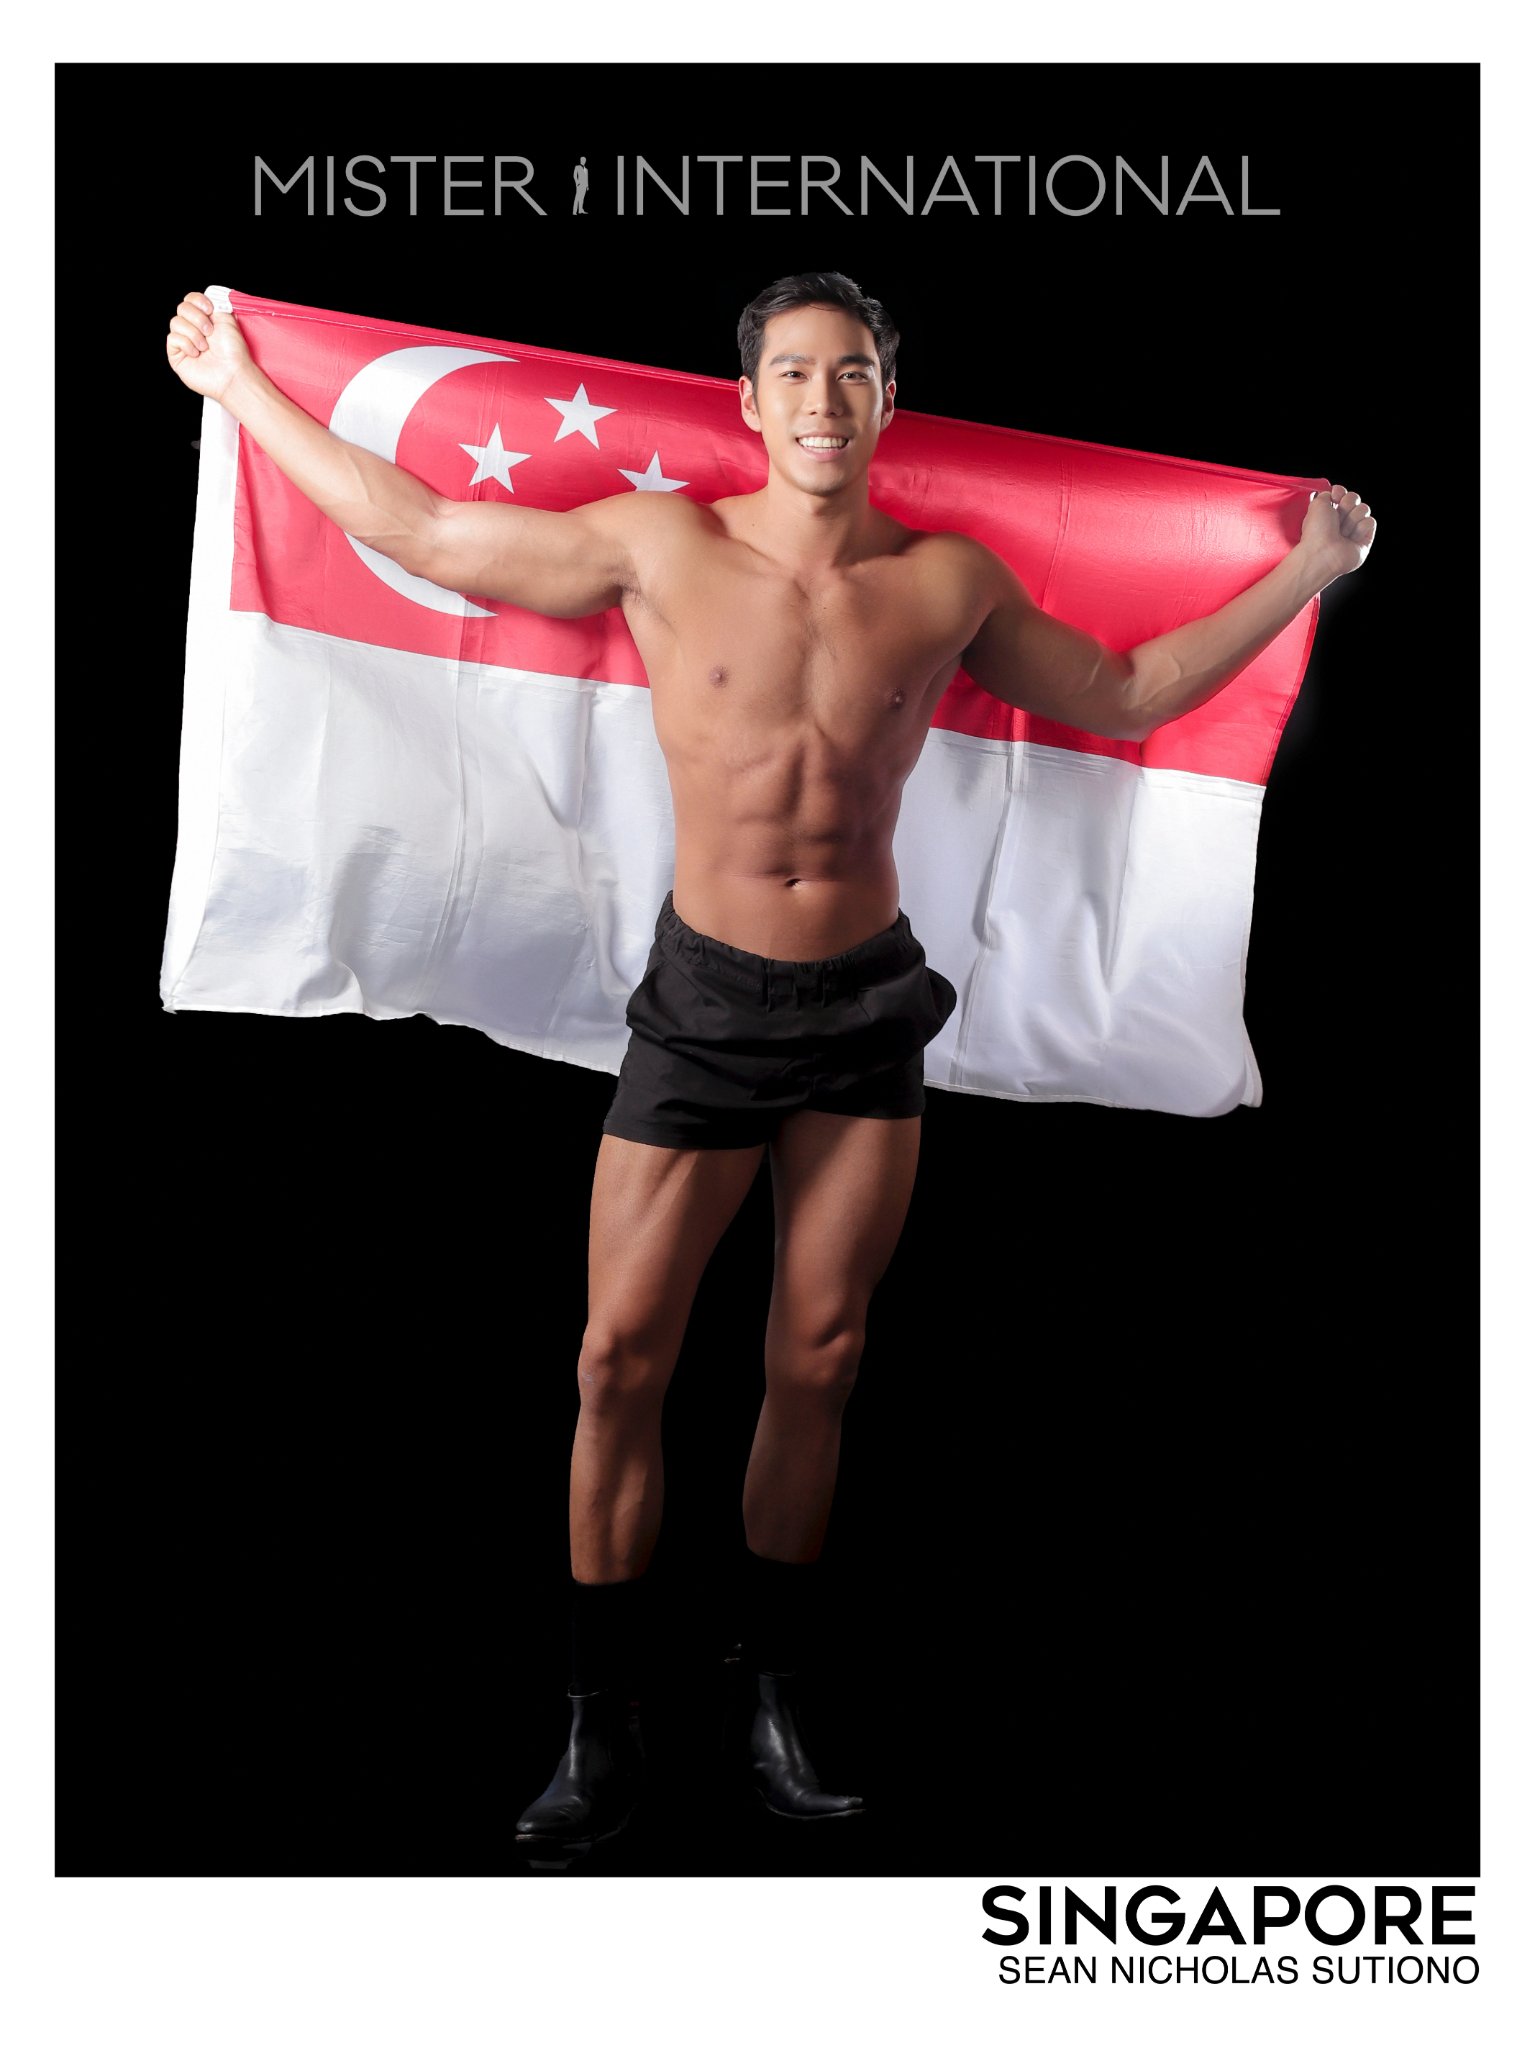 Mister International 2022 SINGAPORE Sean Nicholas Sutiono National Costume Shot by Raymond Saldana